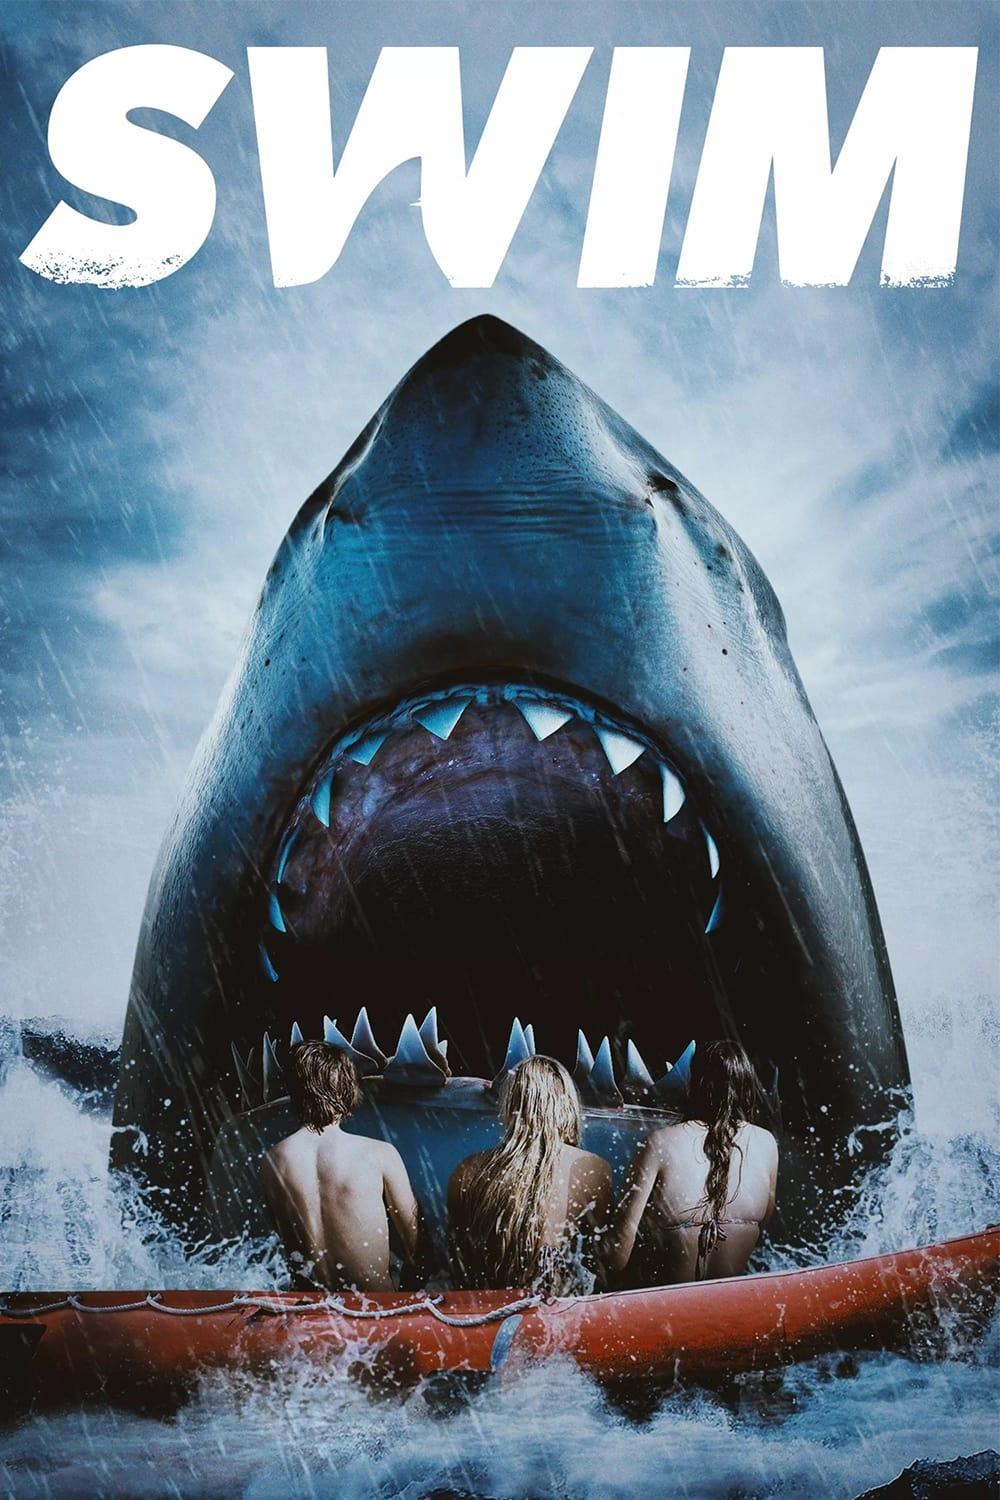 Swim poster